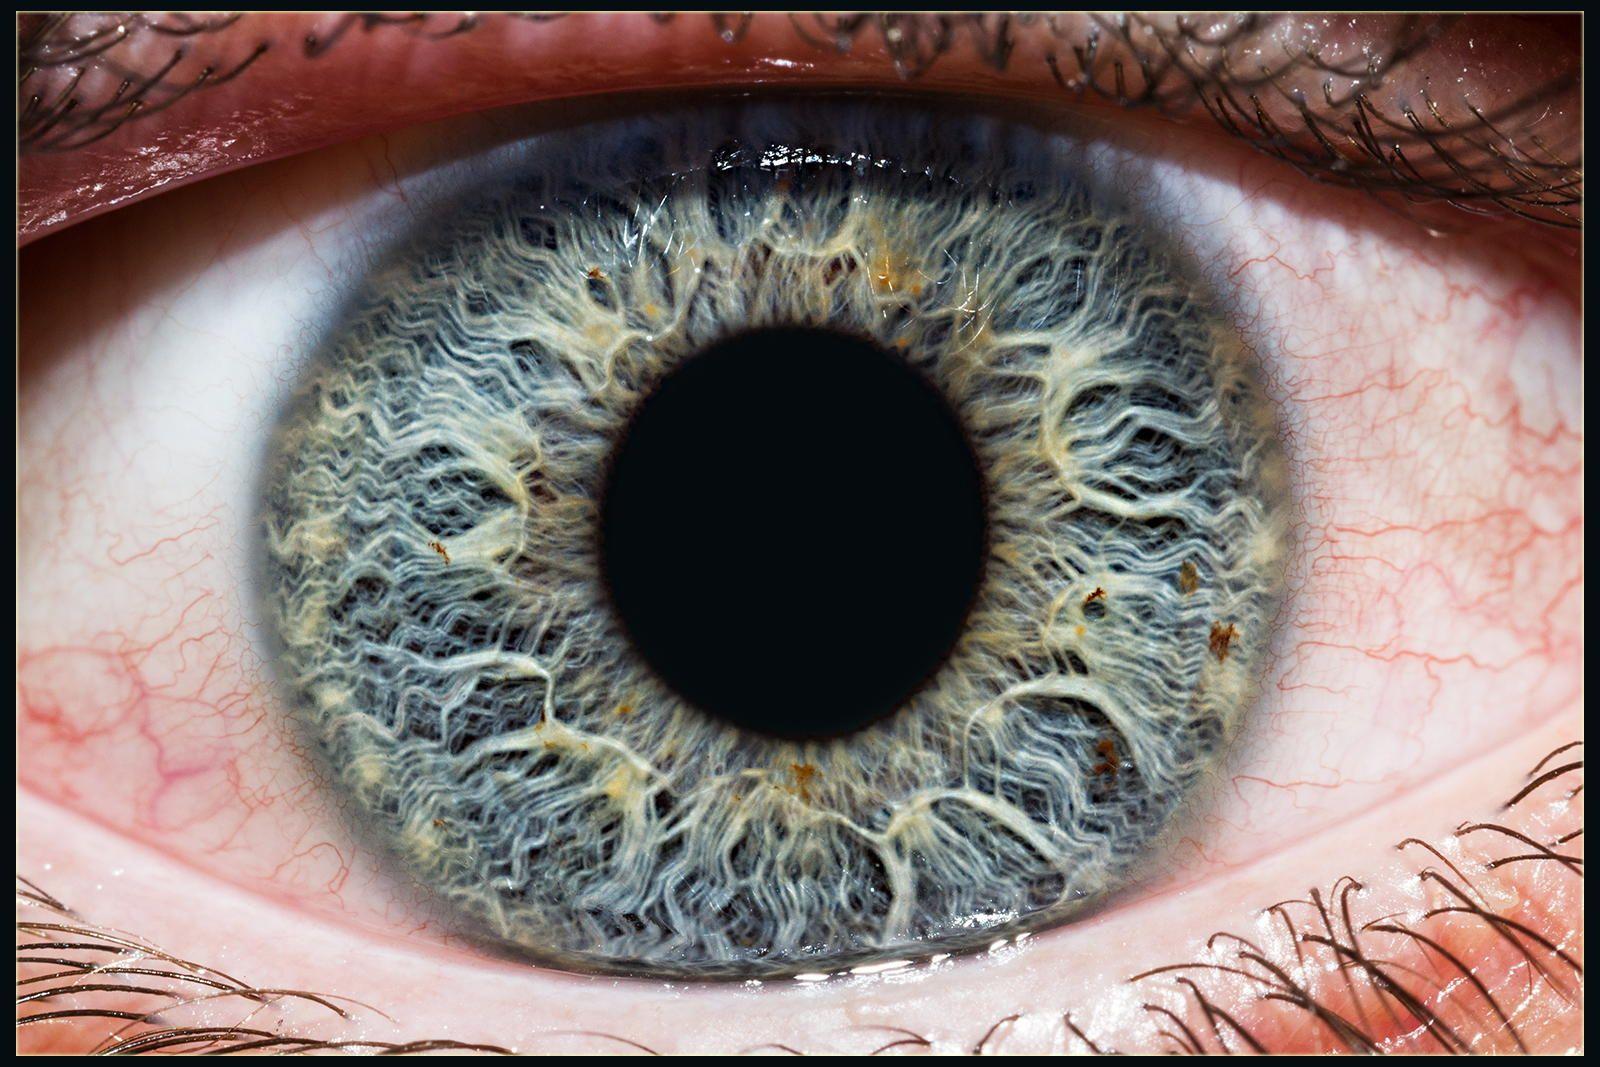 Iris Of The Eyeball Wallpaper High Quality